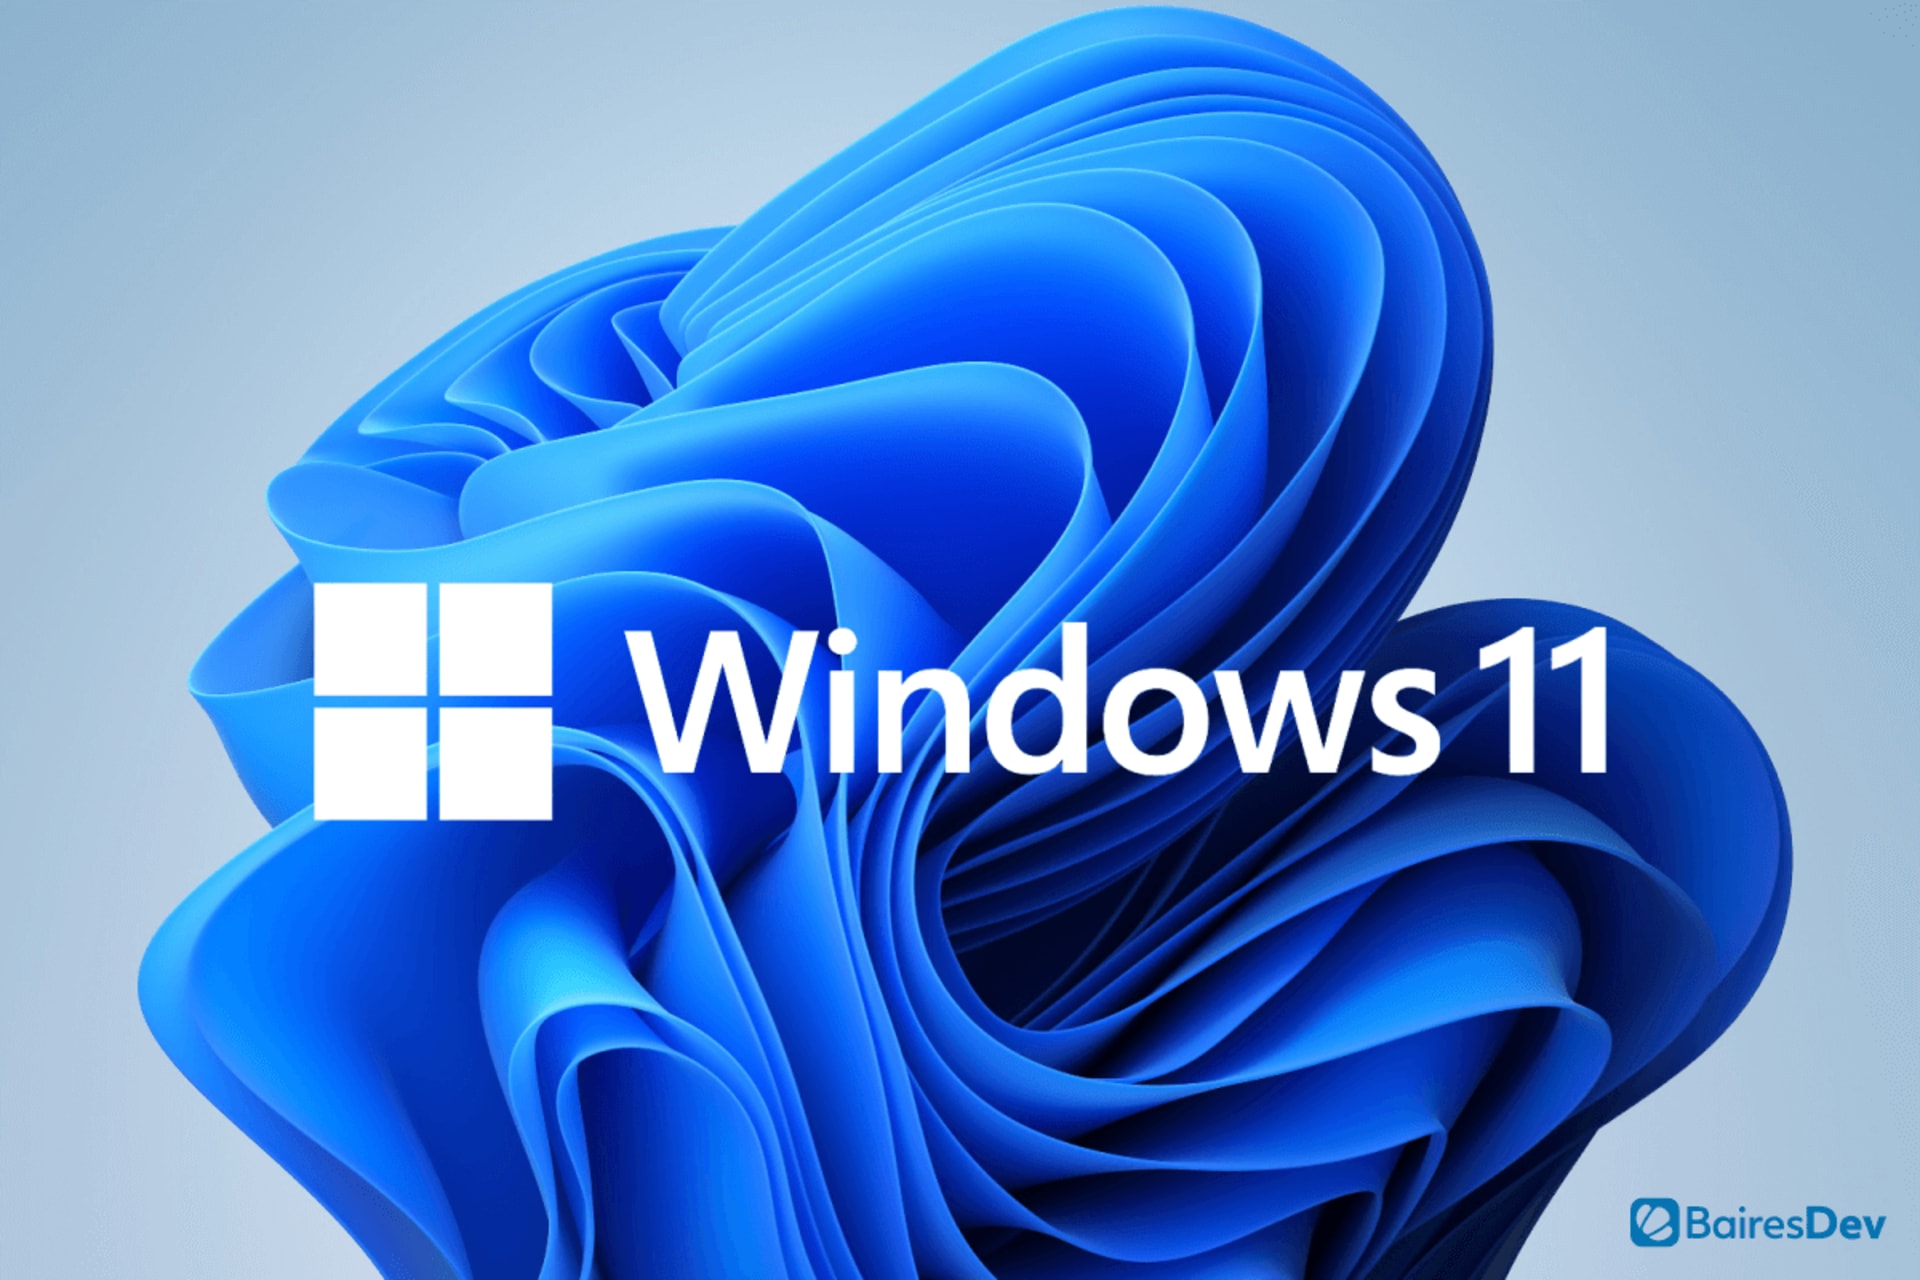 Technology - Windows 11 Is 